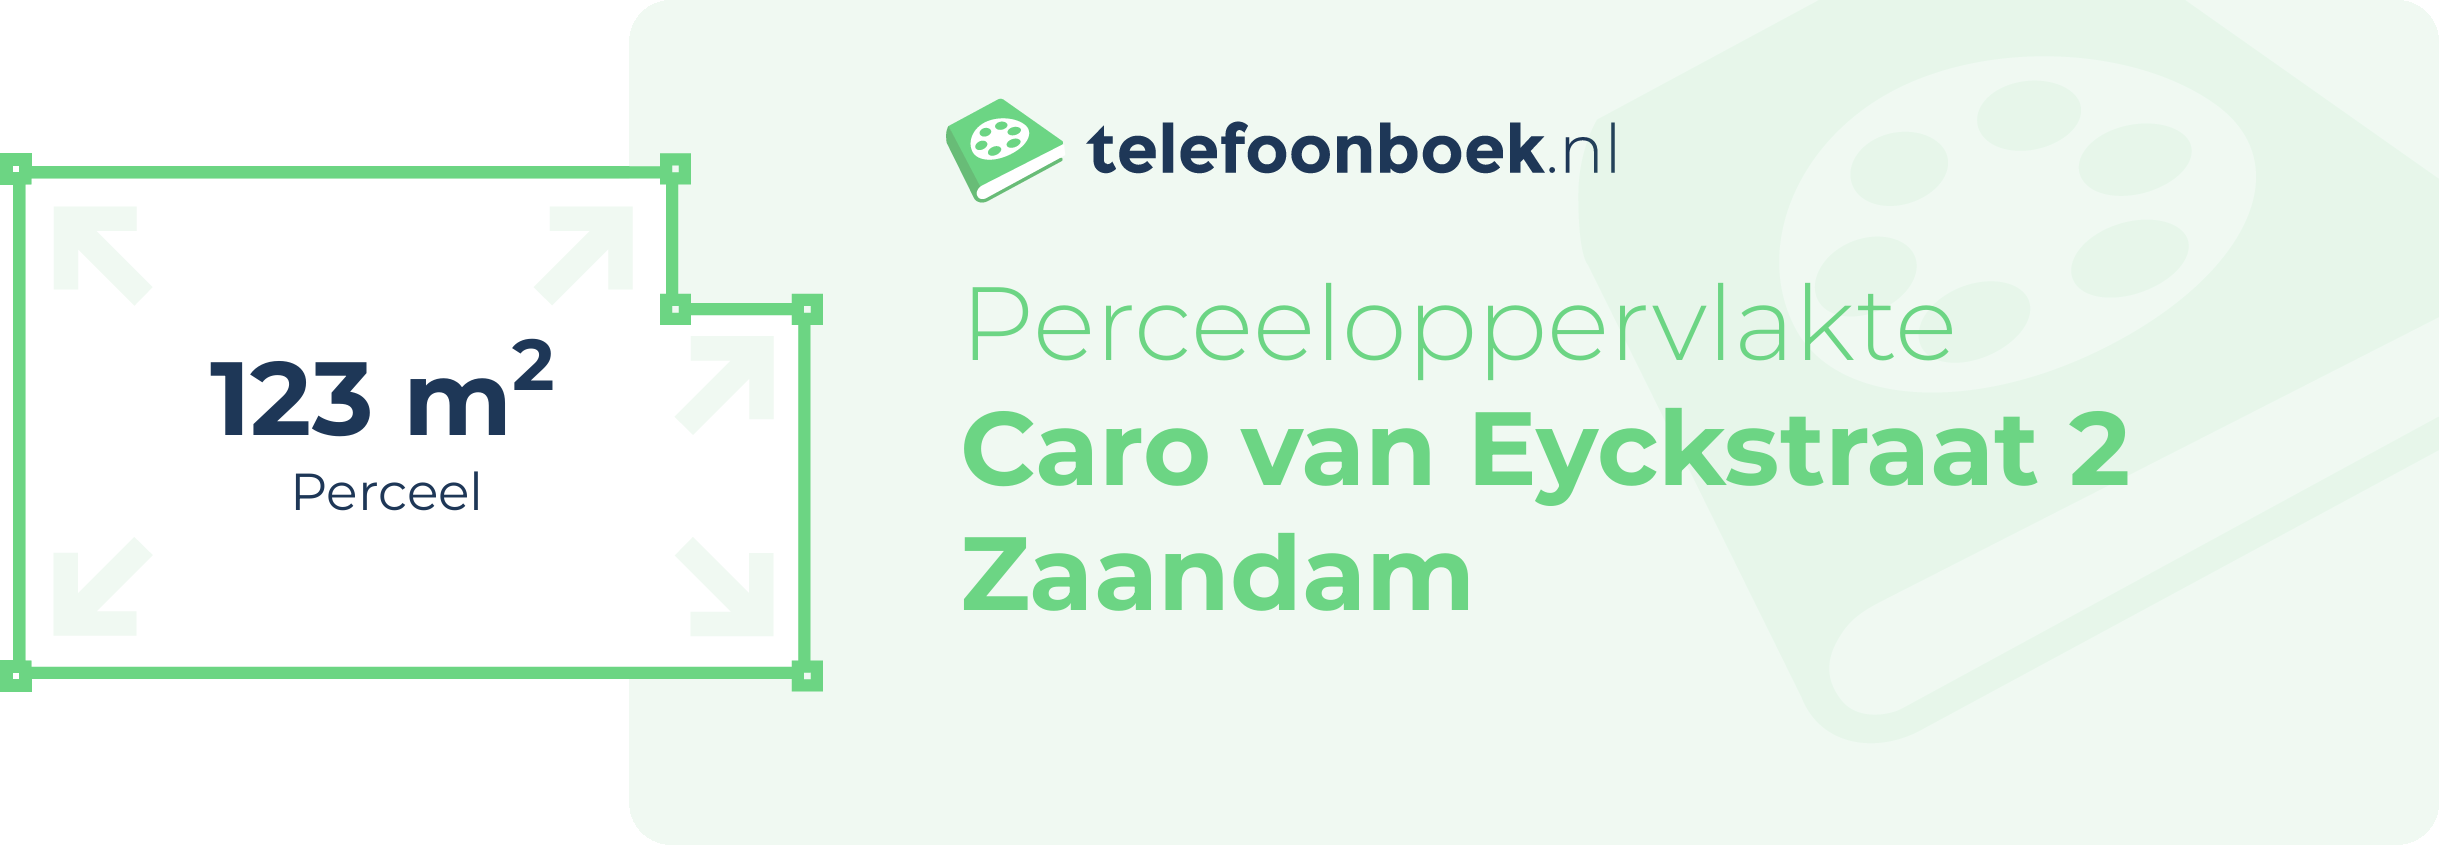 Perceeloppervlakte Caro Van Eyckstraat 2 Zaandam